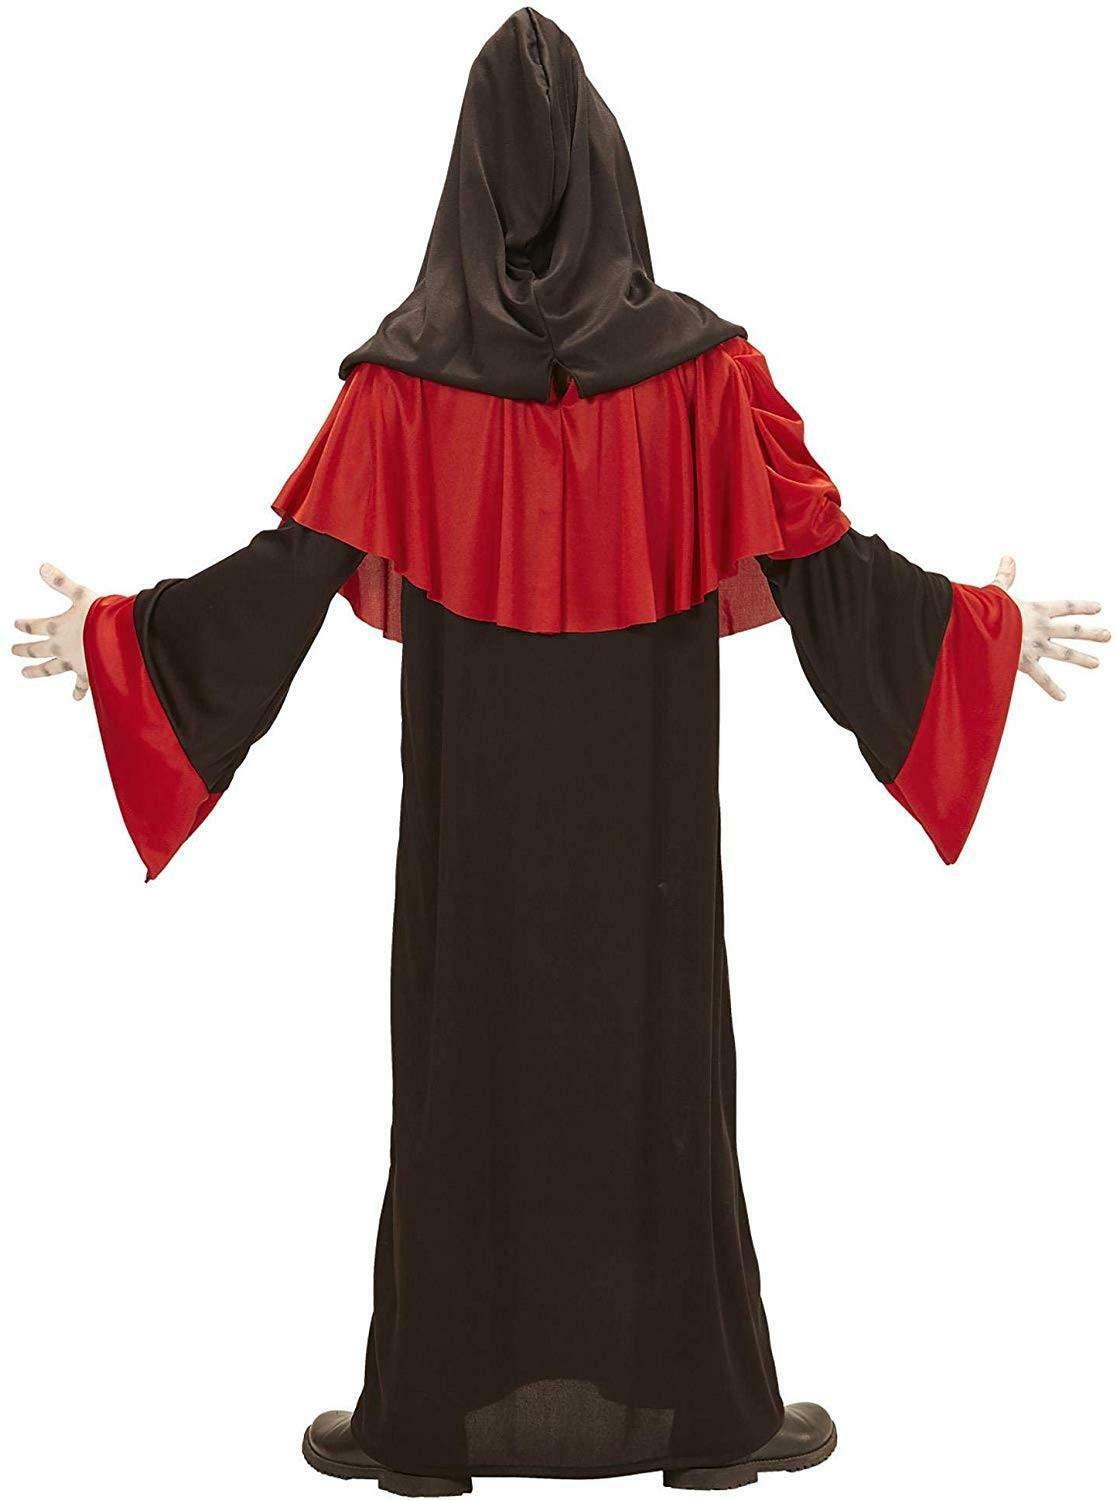 widmann costume demone 11/13 anni - 158 cm